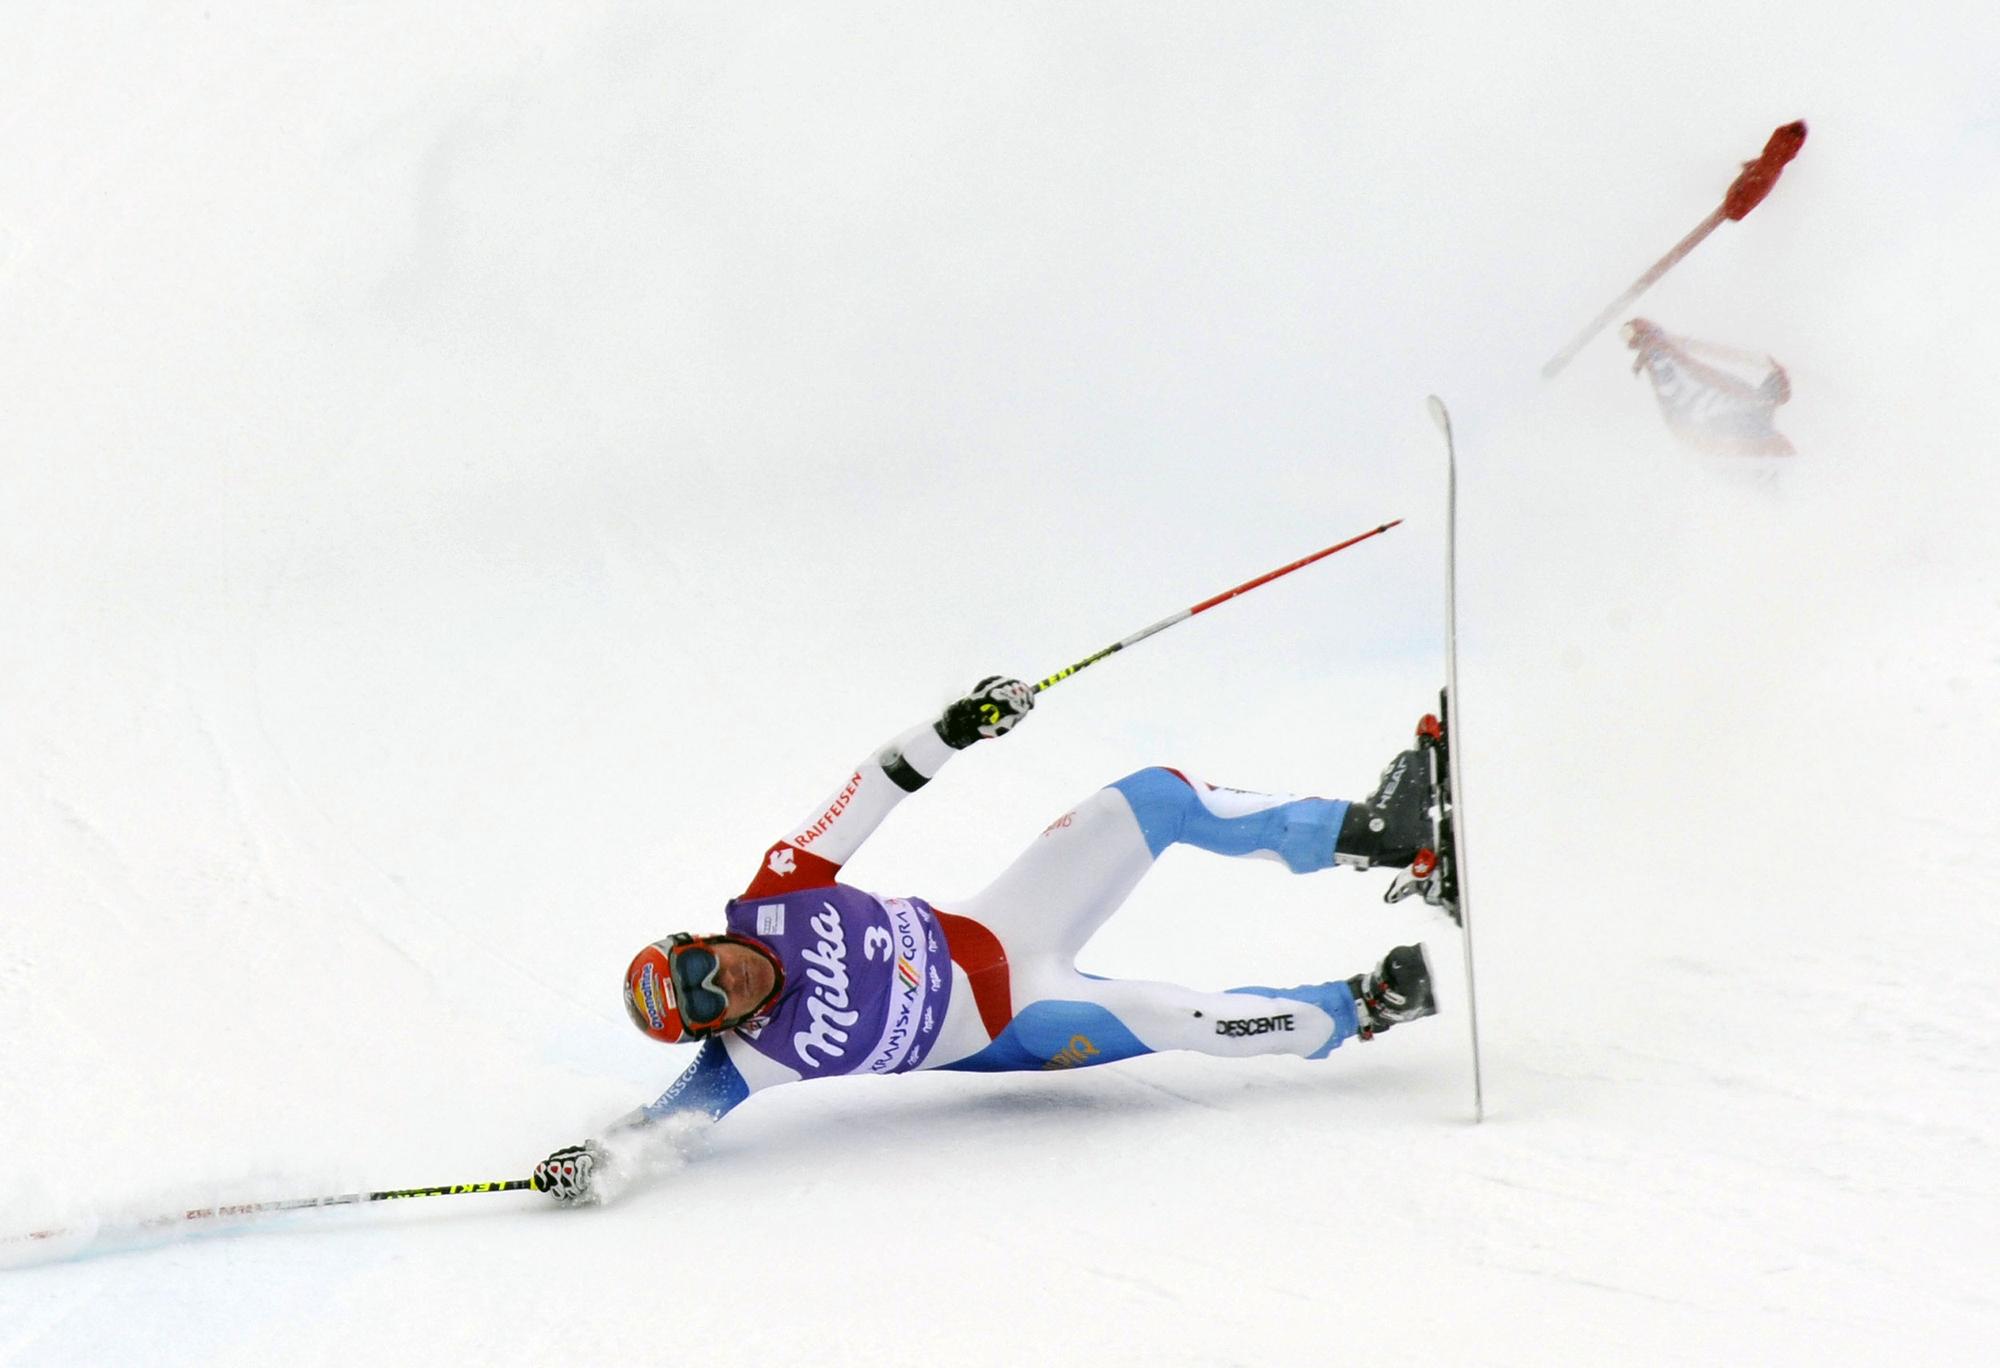 21. Didier Cuche of Switzerland falls during the second run of the men's giant slalom Alpine skiing World Cup race in Kranjska Gora January 29, 2010. REUTERS/Srdjan Zivulovic (SLOVENIA - Tags: SPORT SKIING) [REUTERS - Srdjan Zivulovic]